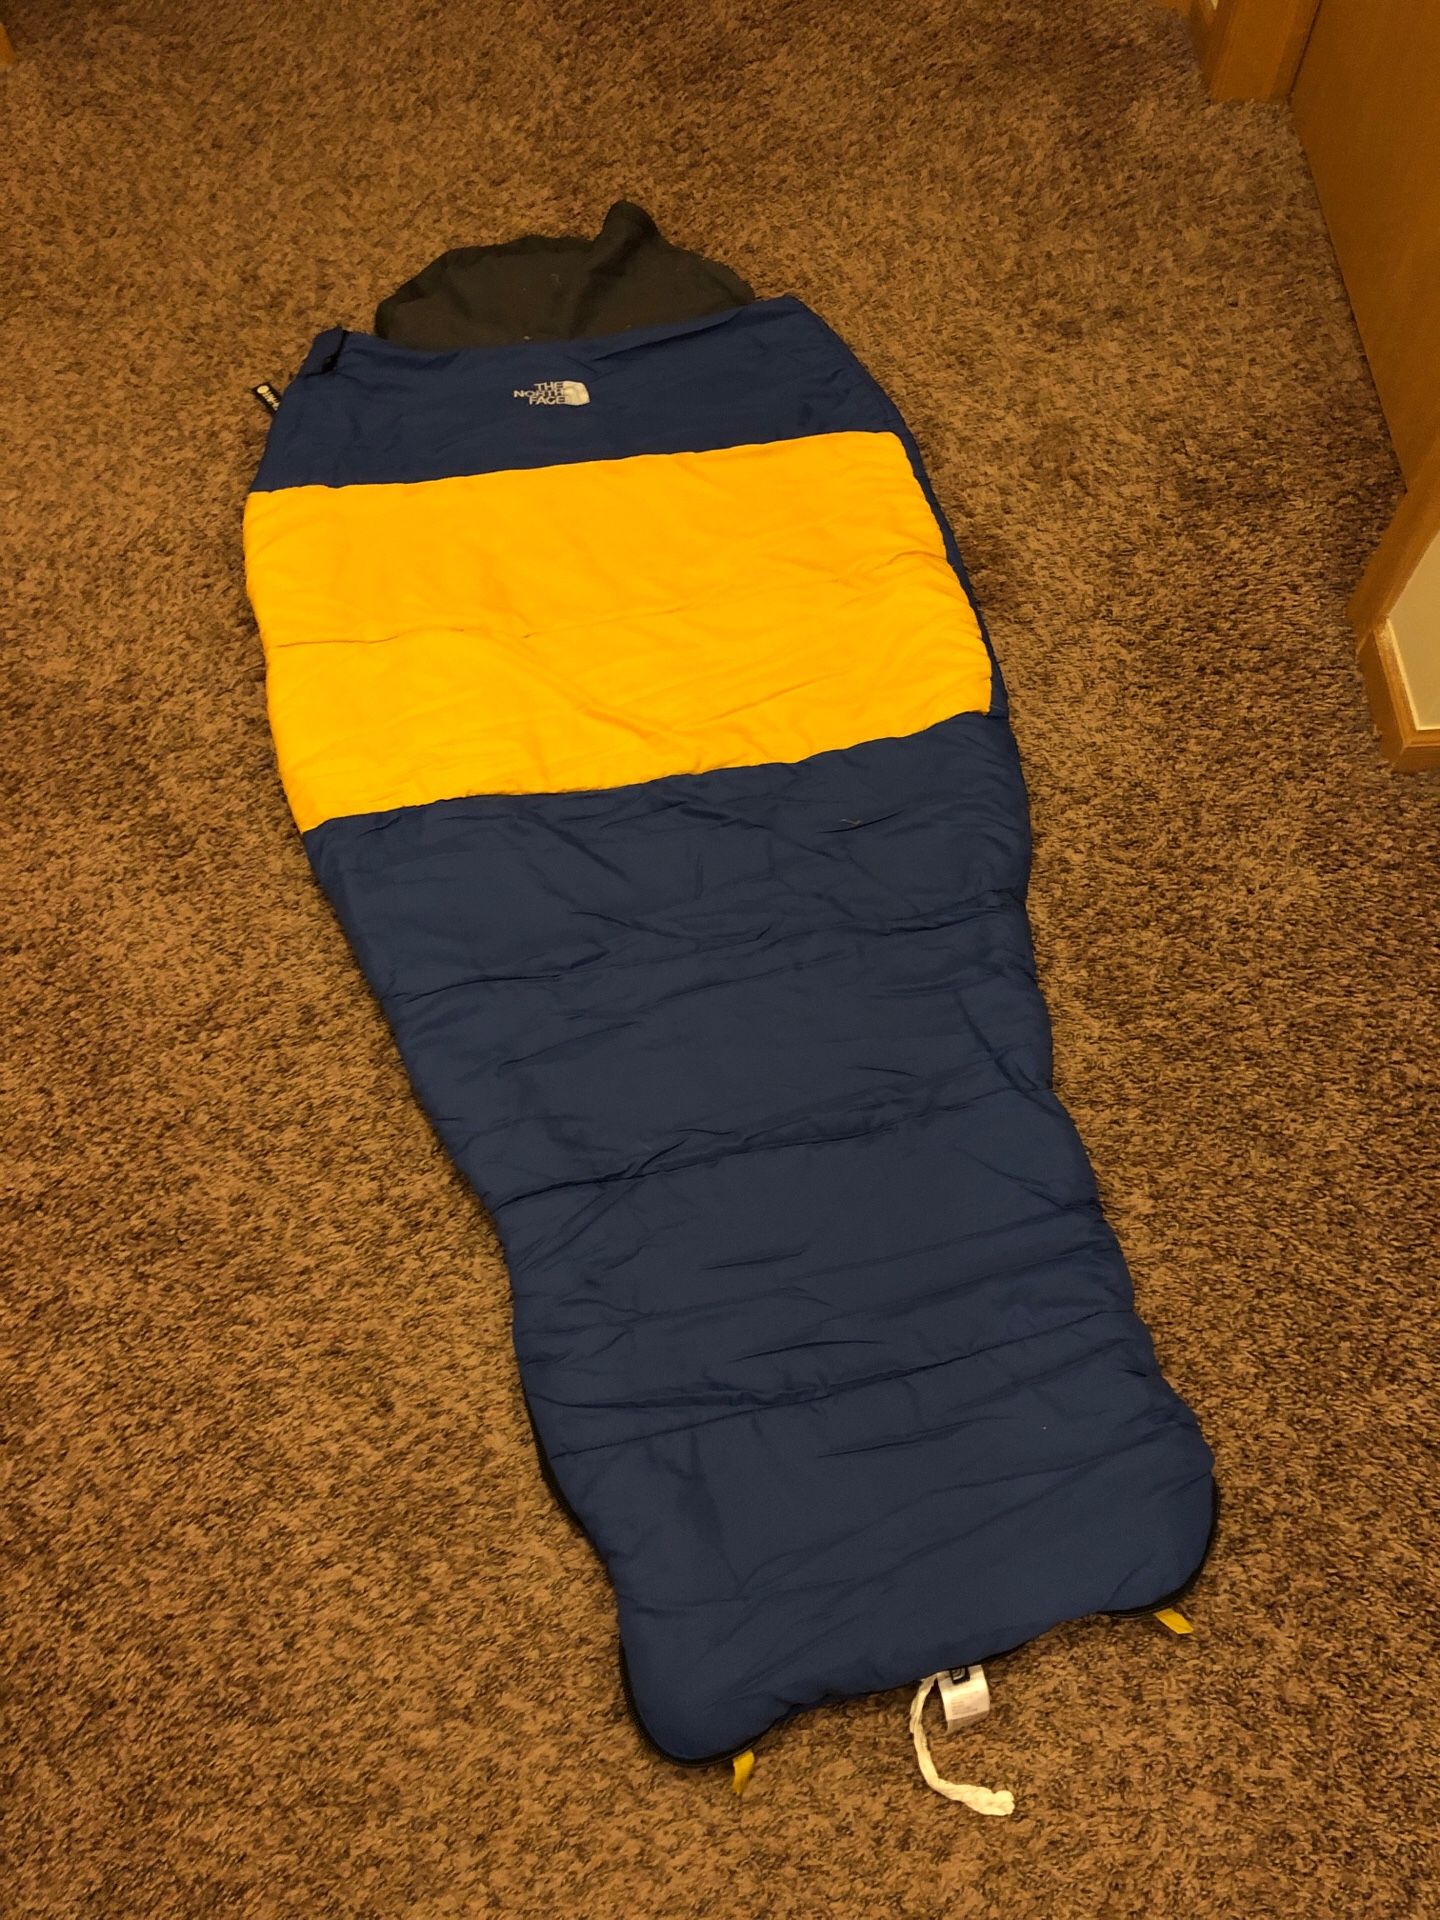 North Face Kids Mummy Style Sleeping Bag(s)